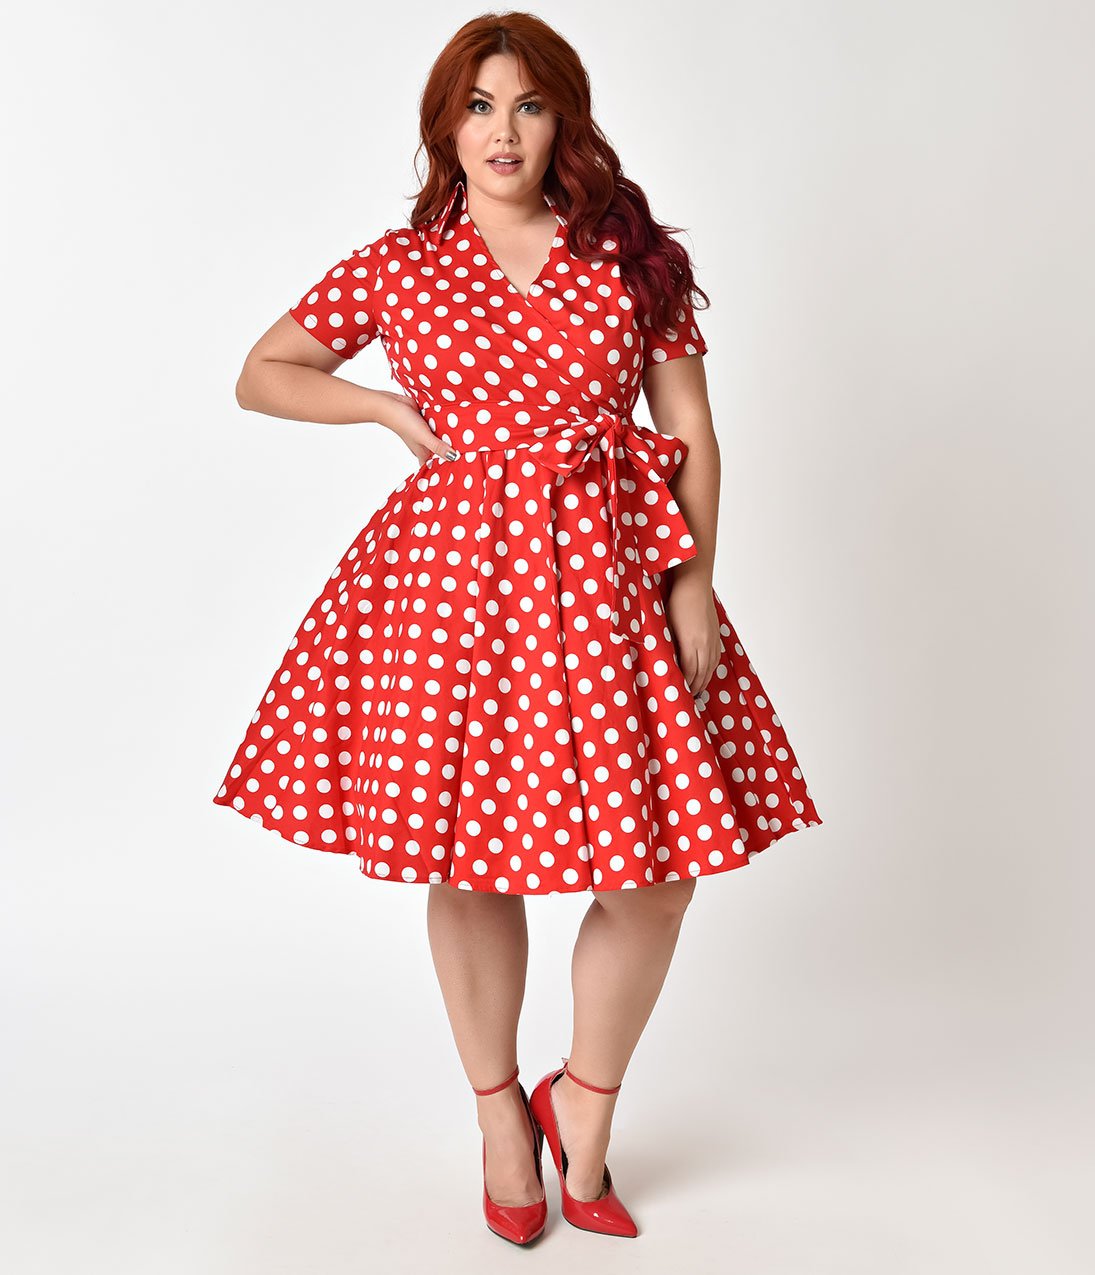 1950s red polka dot dress